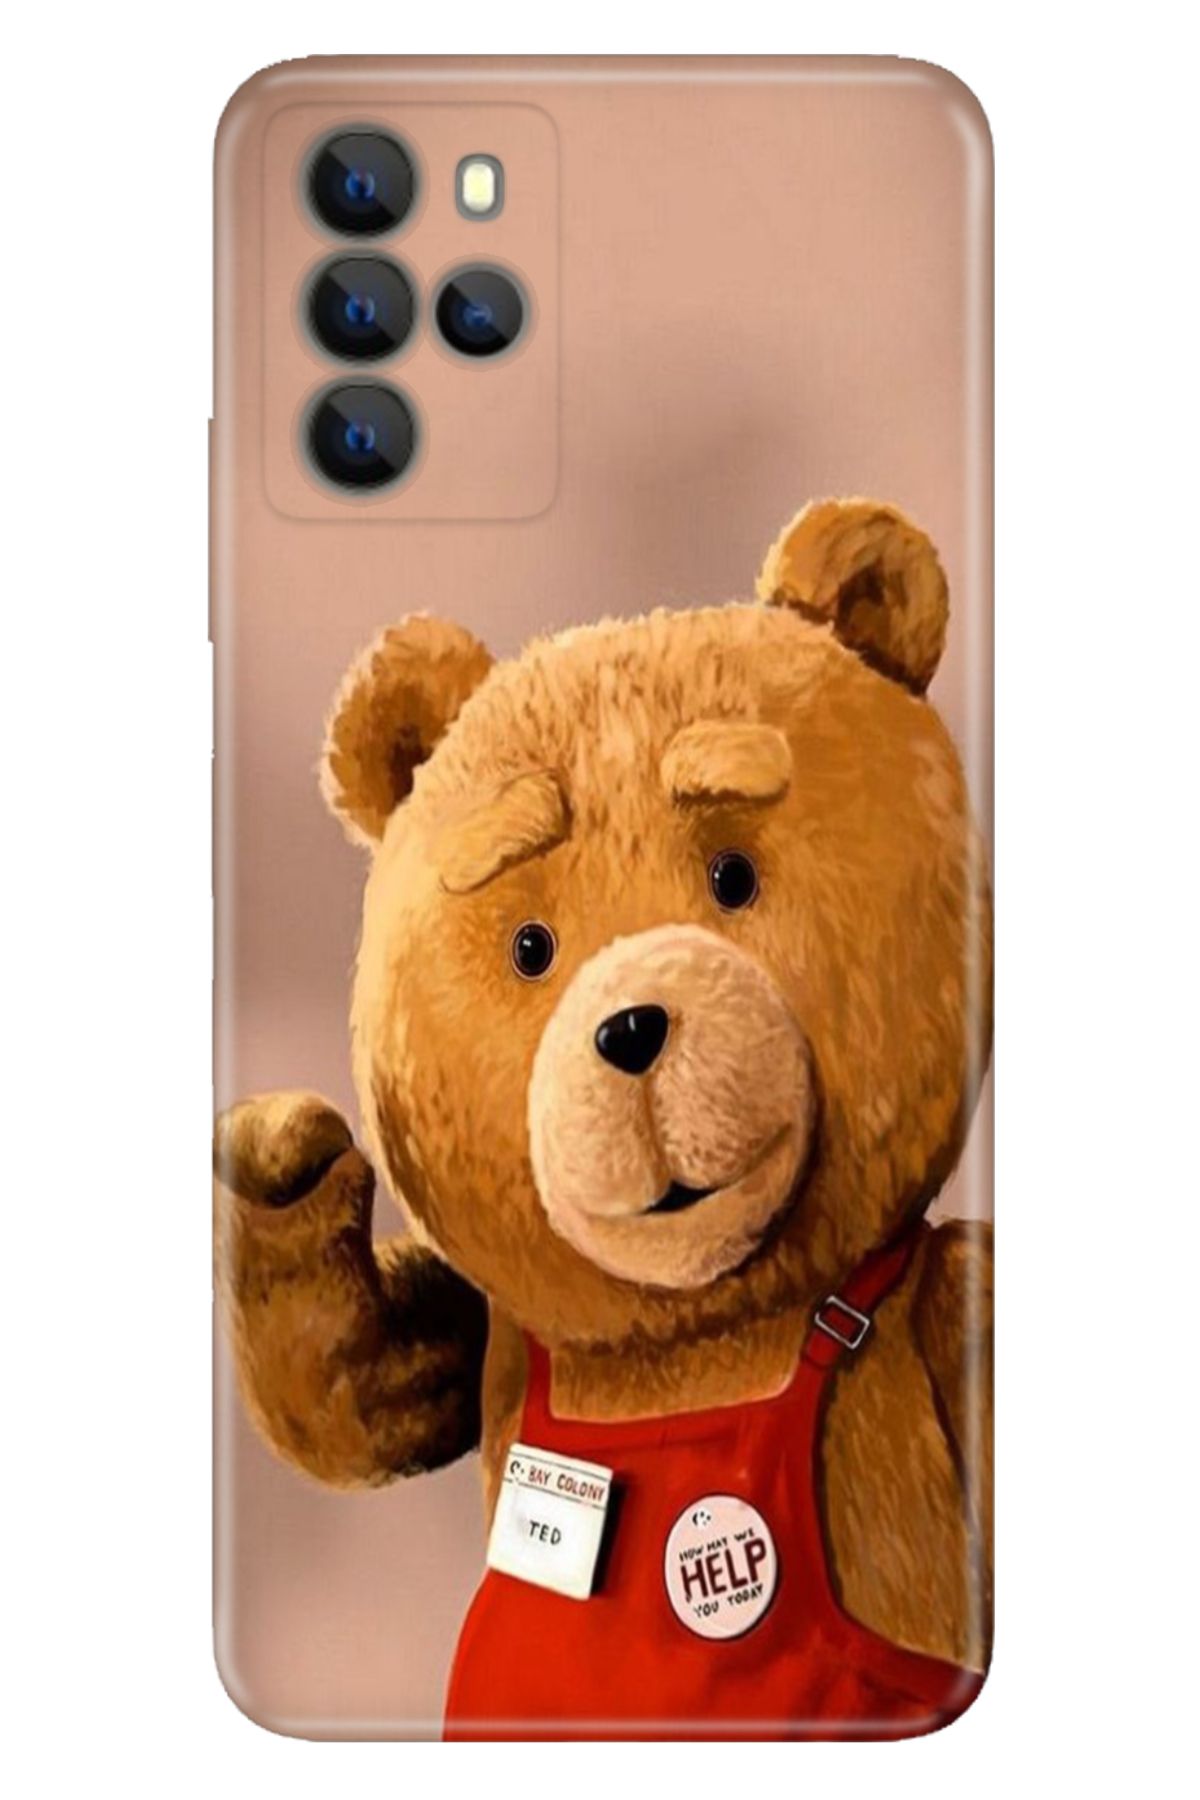 omix X700 Uyumlu Kılıf Resimli Desenli Silikon Teddy